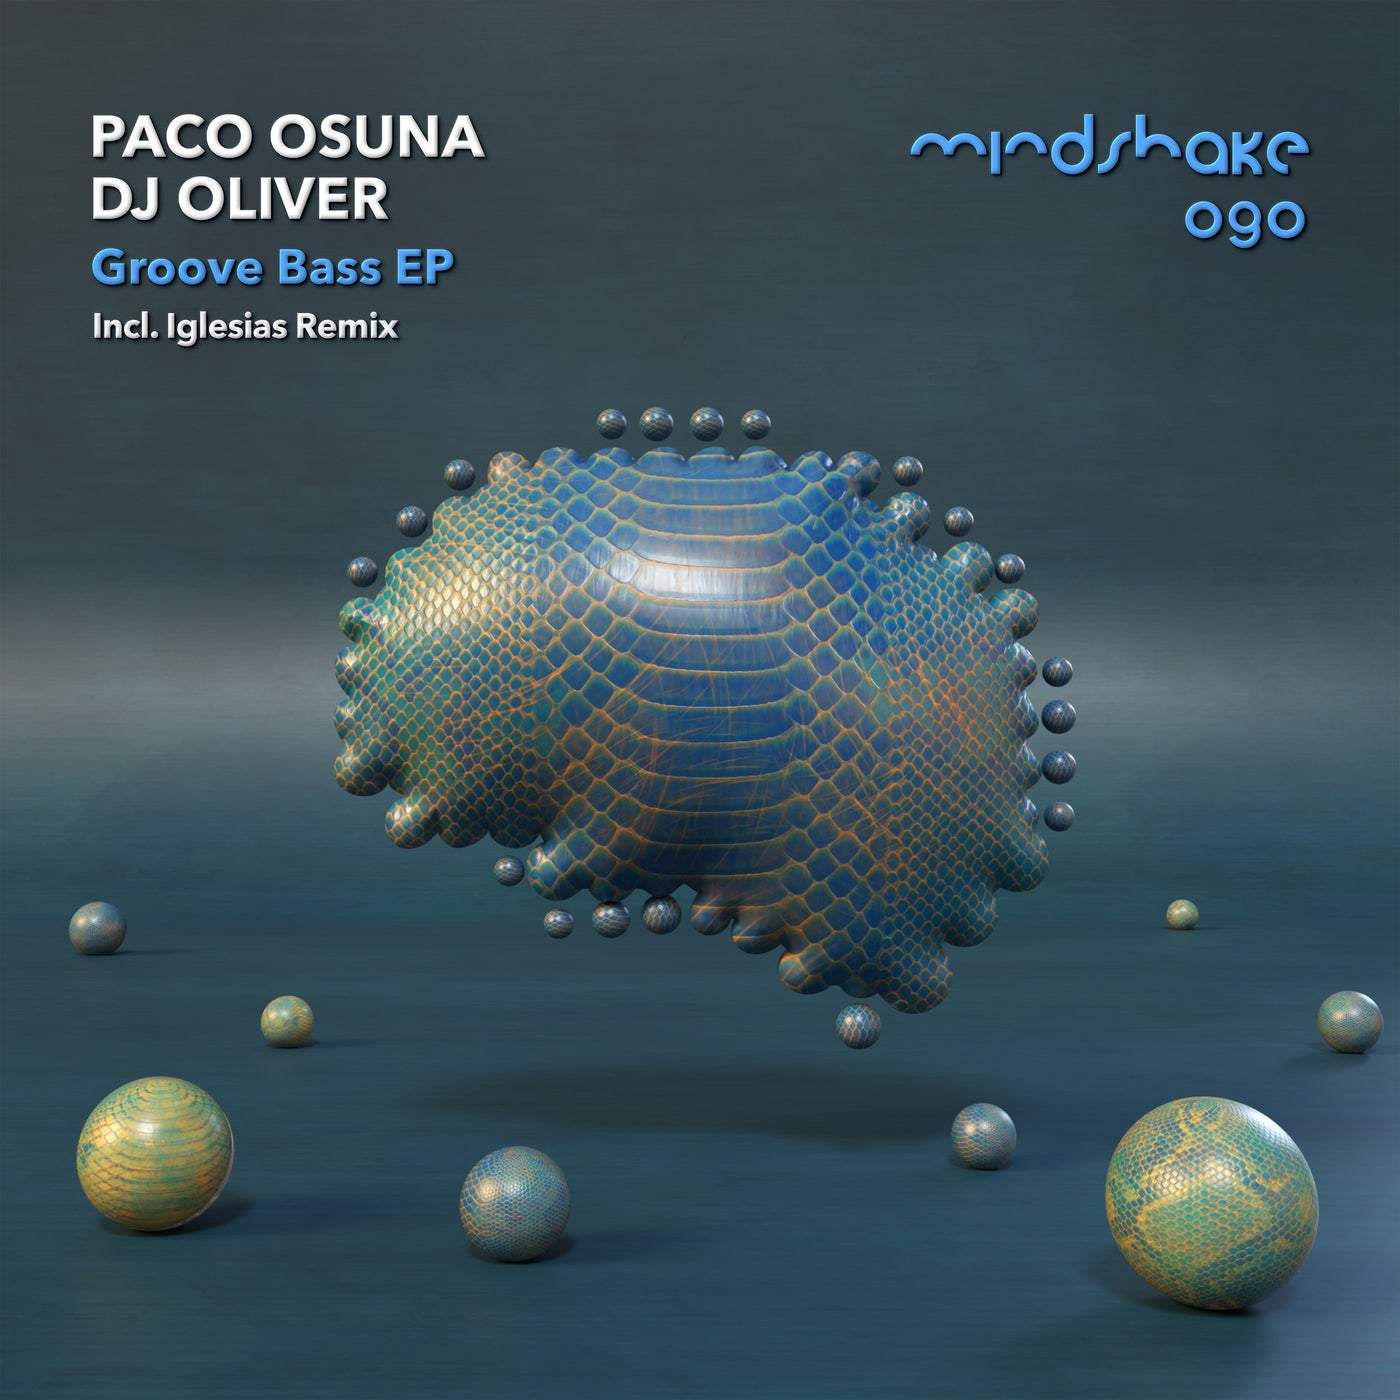 image cover: DJ Oliver, Paco Osuna - Groove Bass EP / MINDSHAKE090